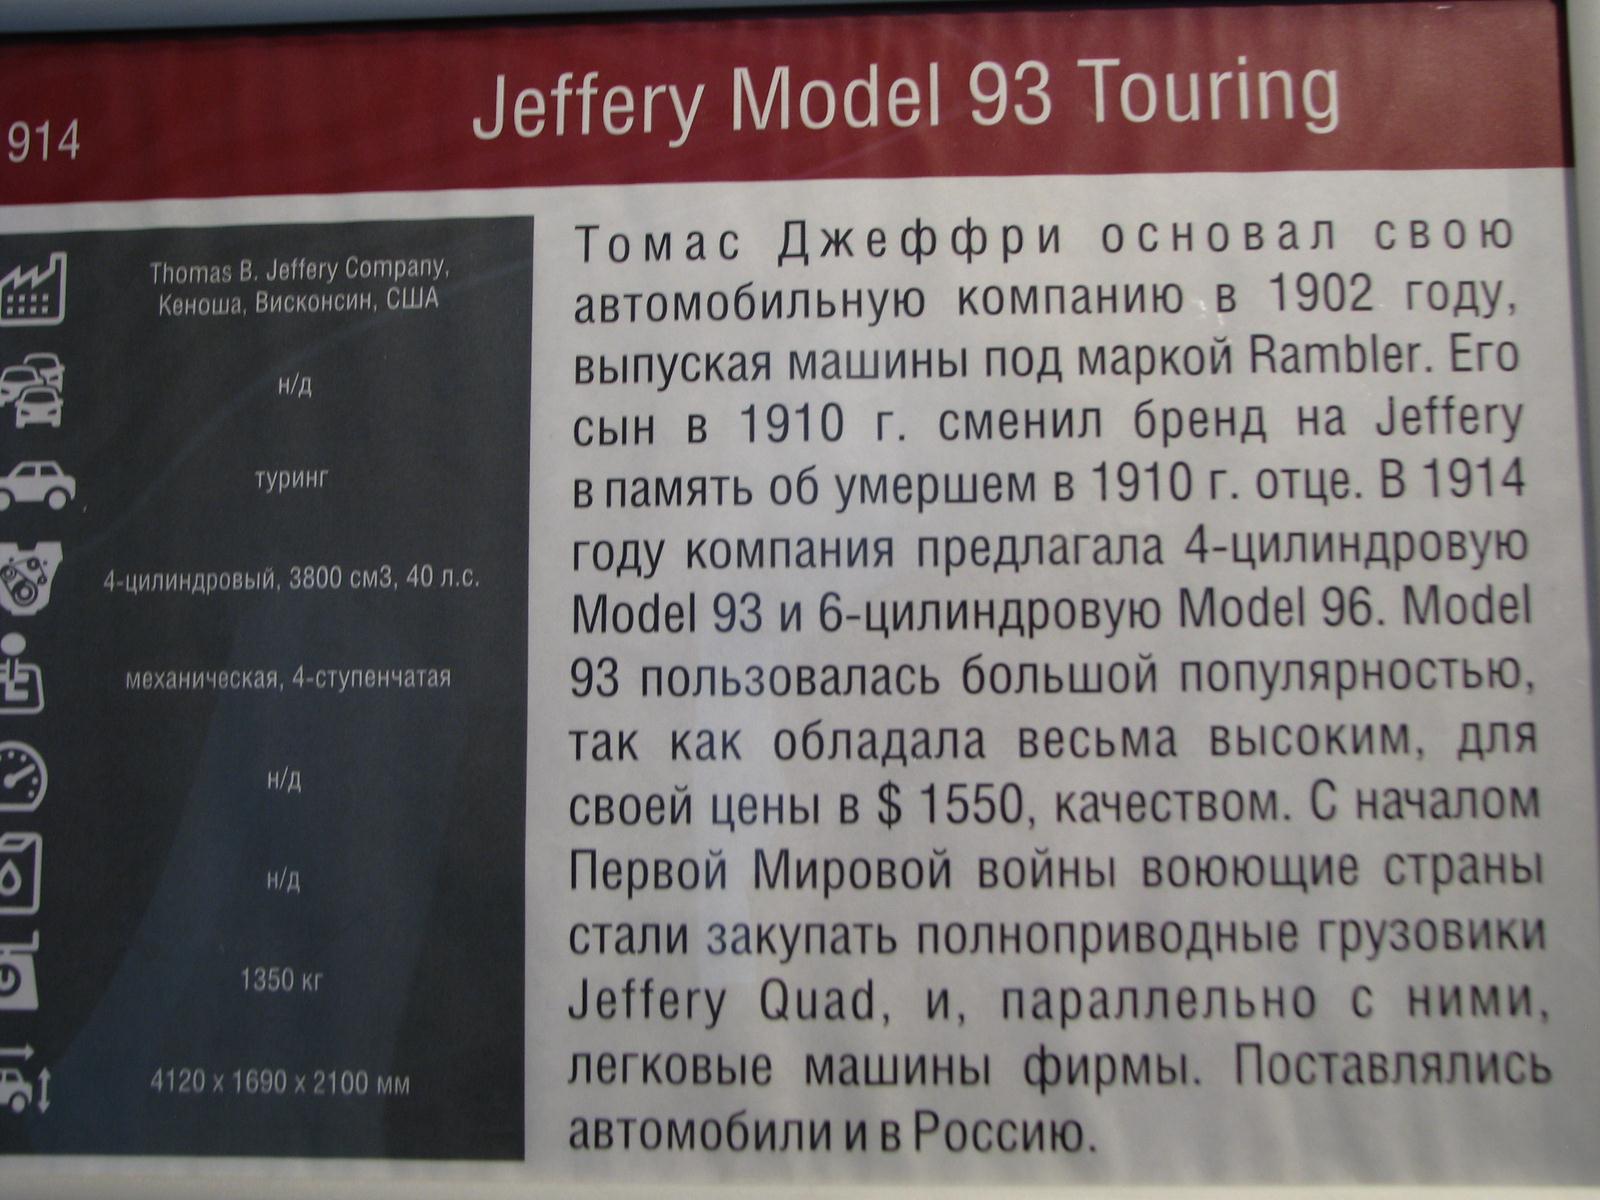 1914. Jeffery Model 93 Touring